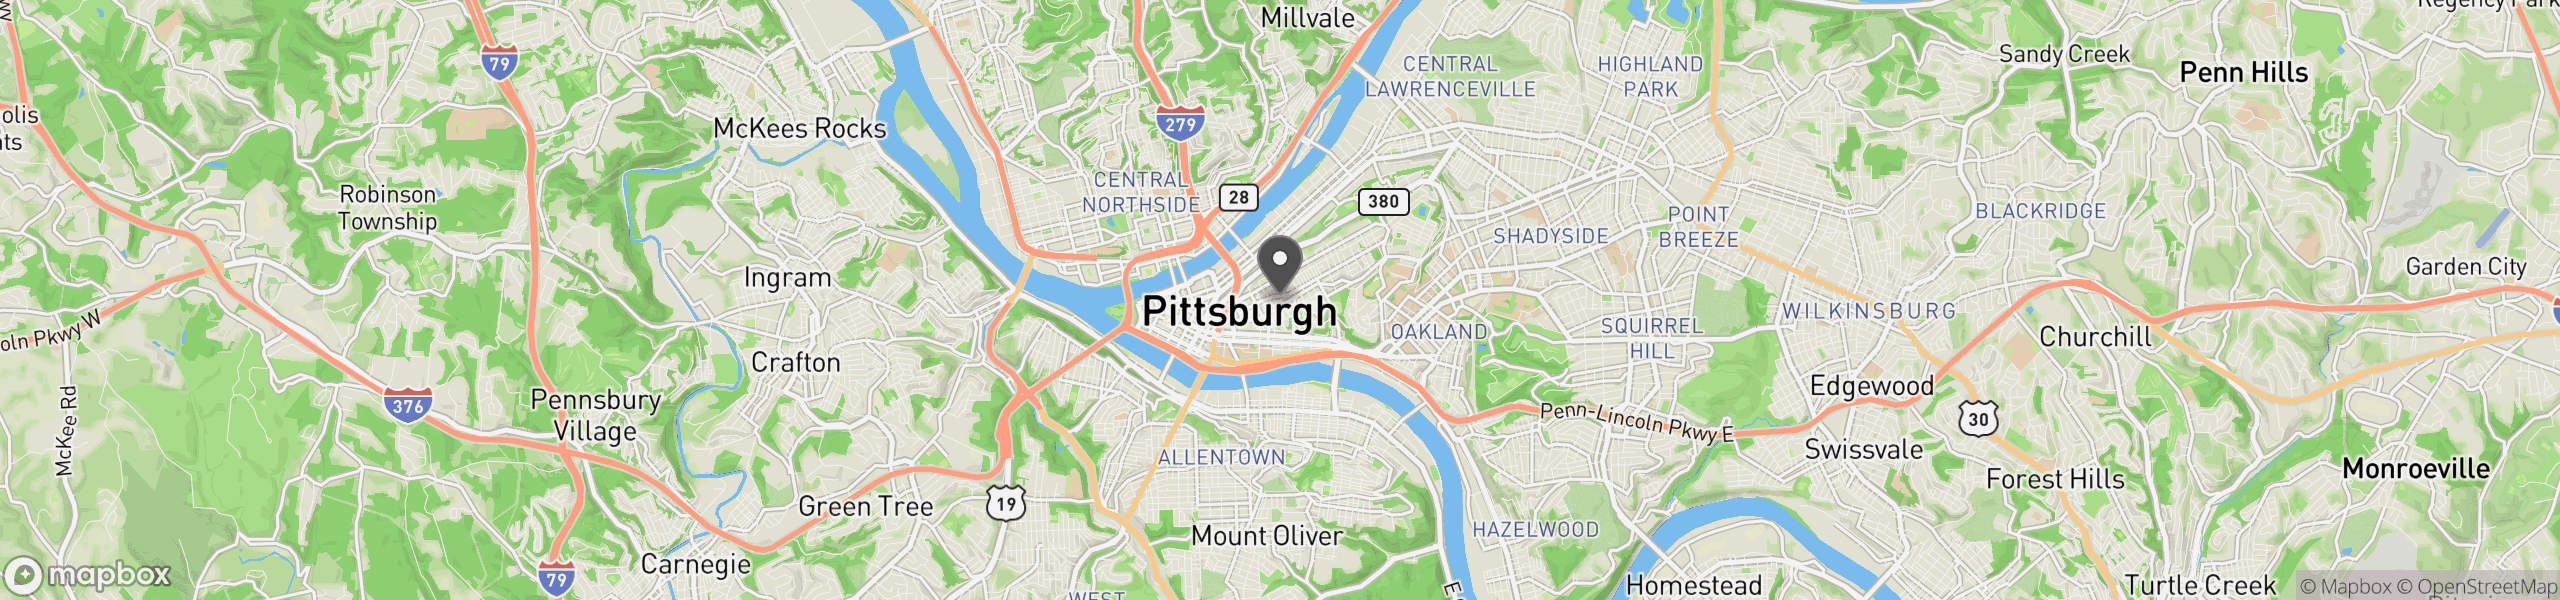 Pittsburgh, PA 15219